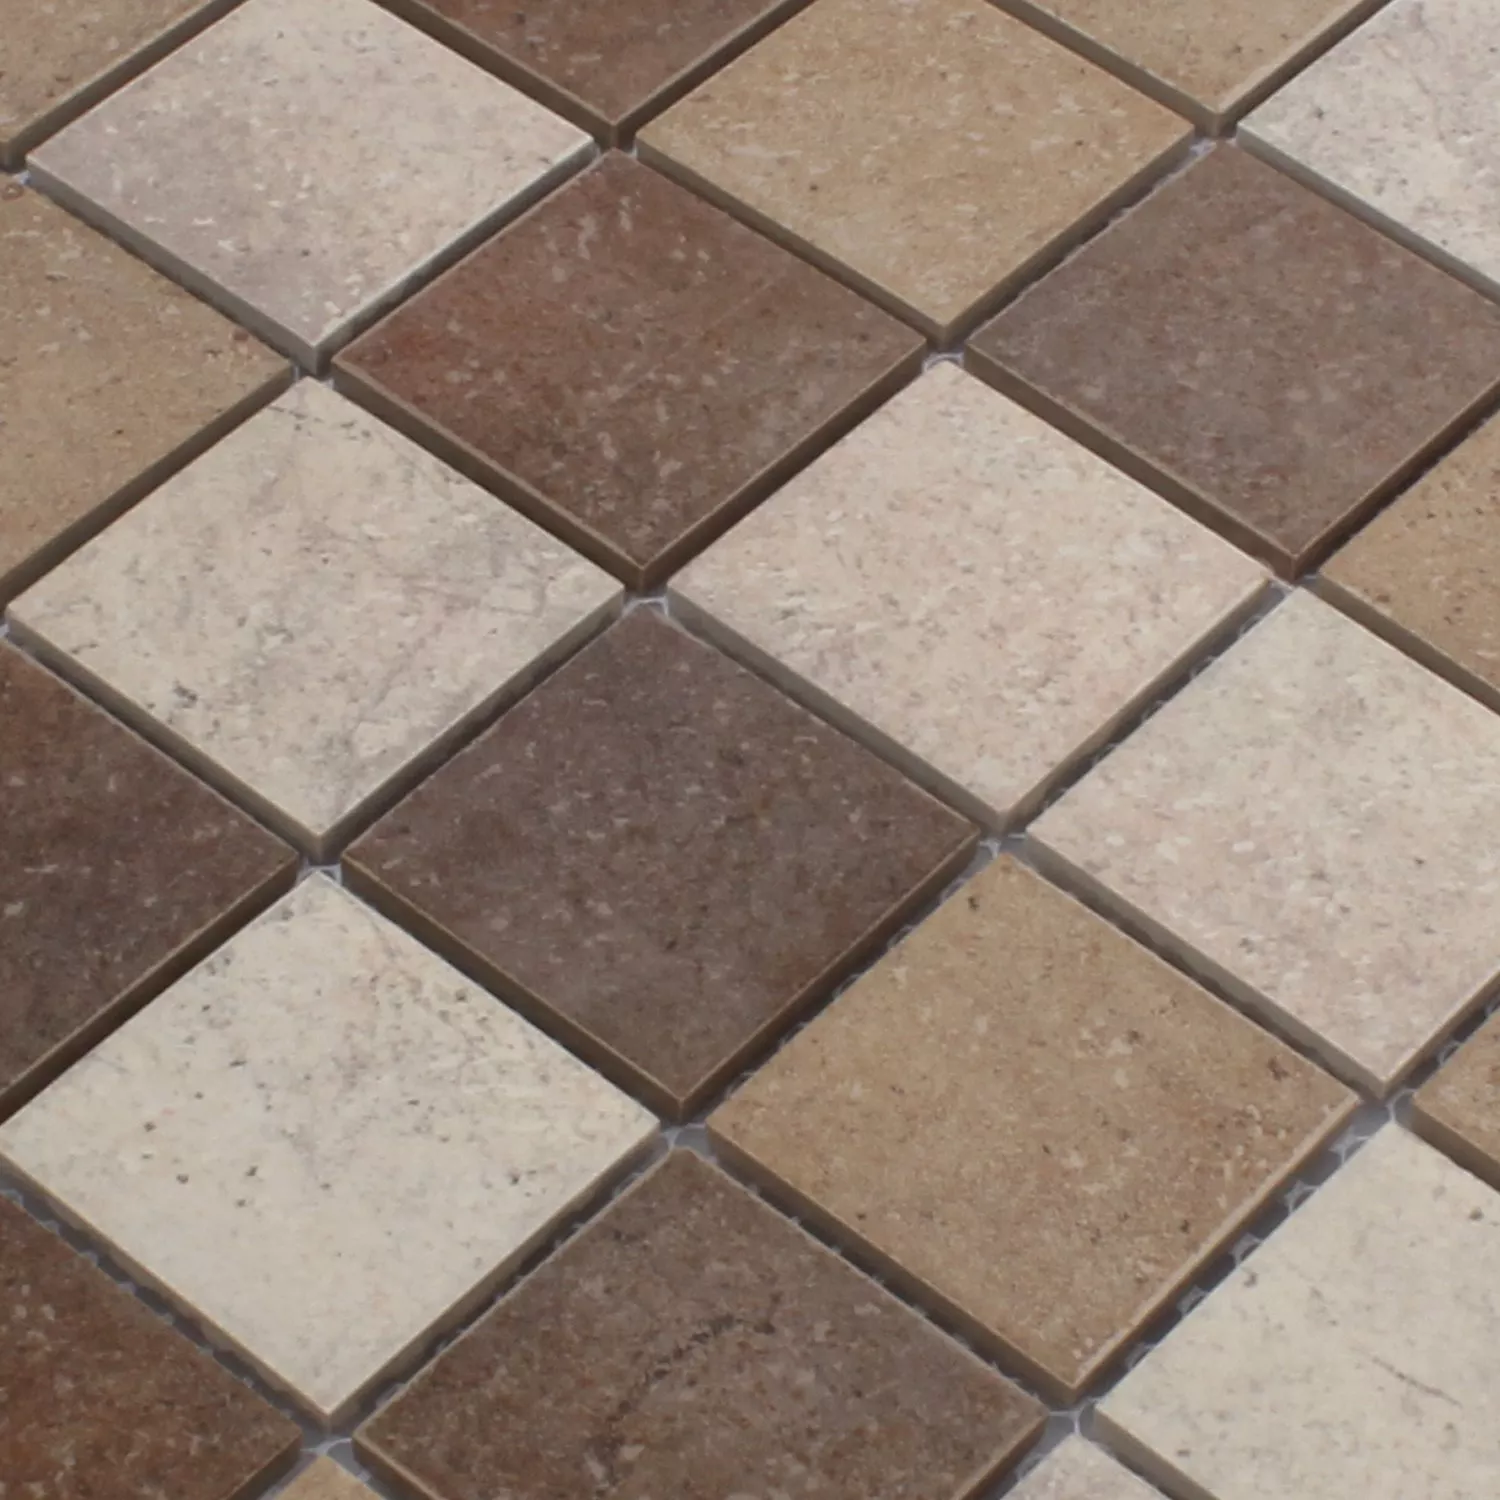 Sample Mosaic Tiles Ceramic Gerlof Rustic Beige